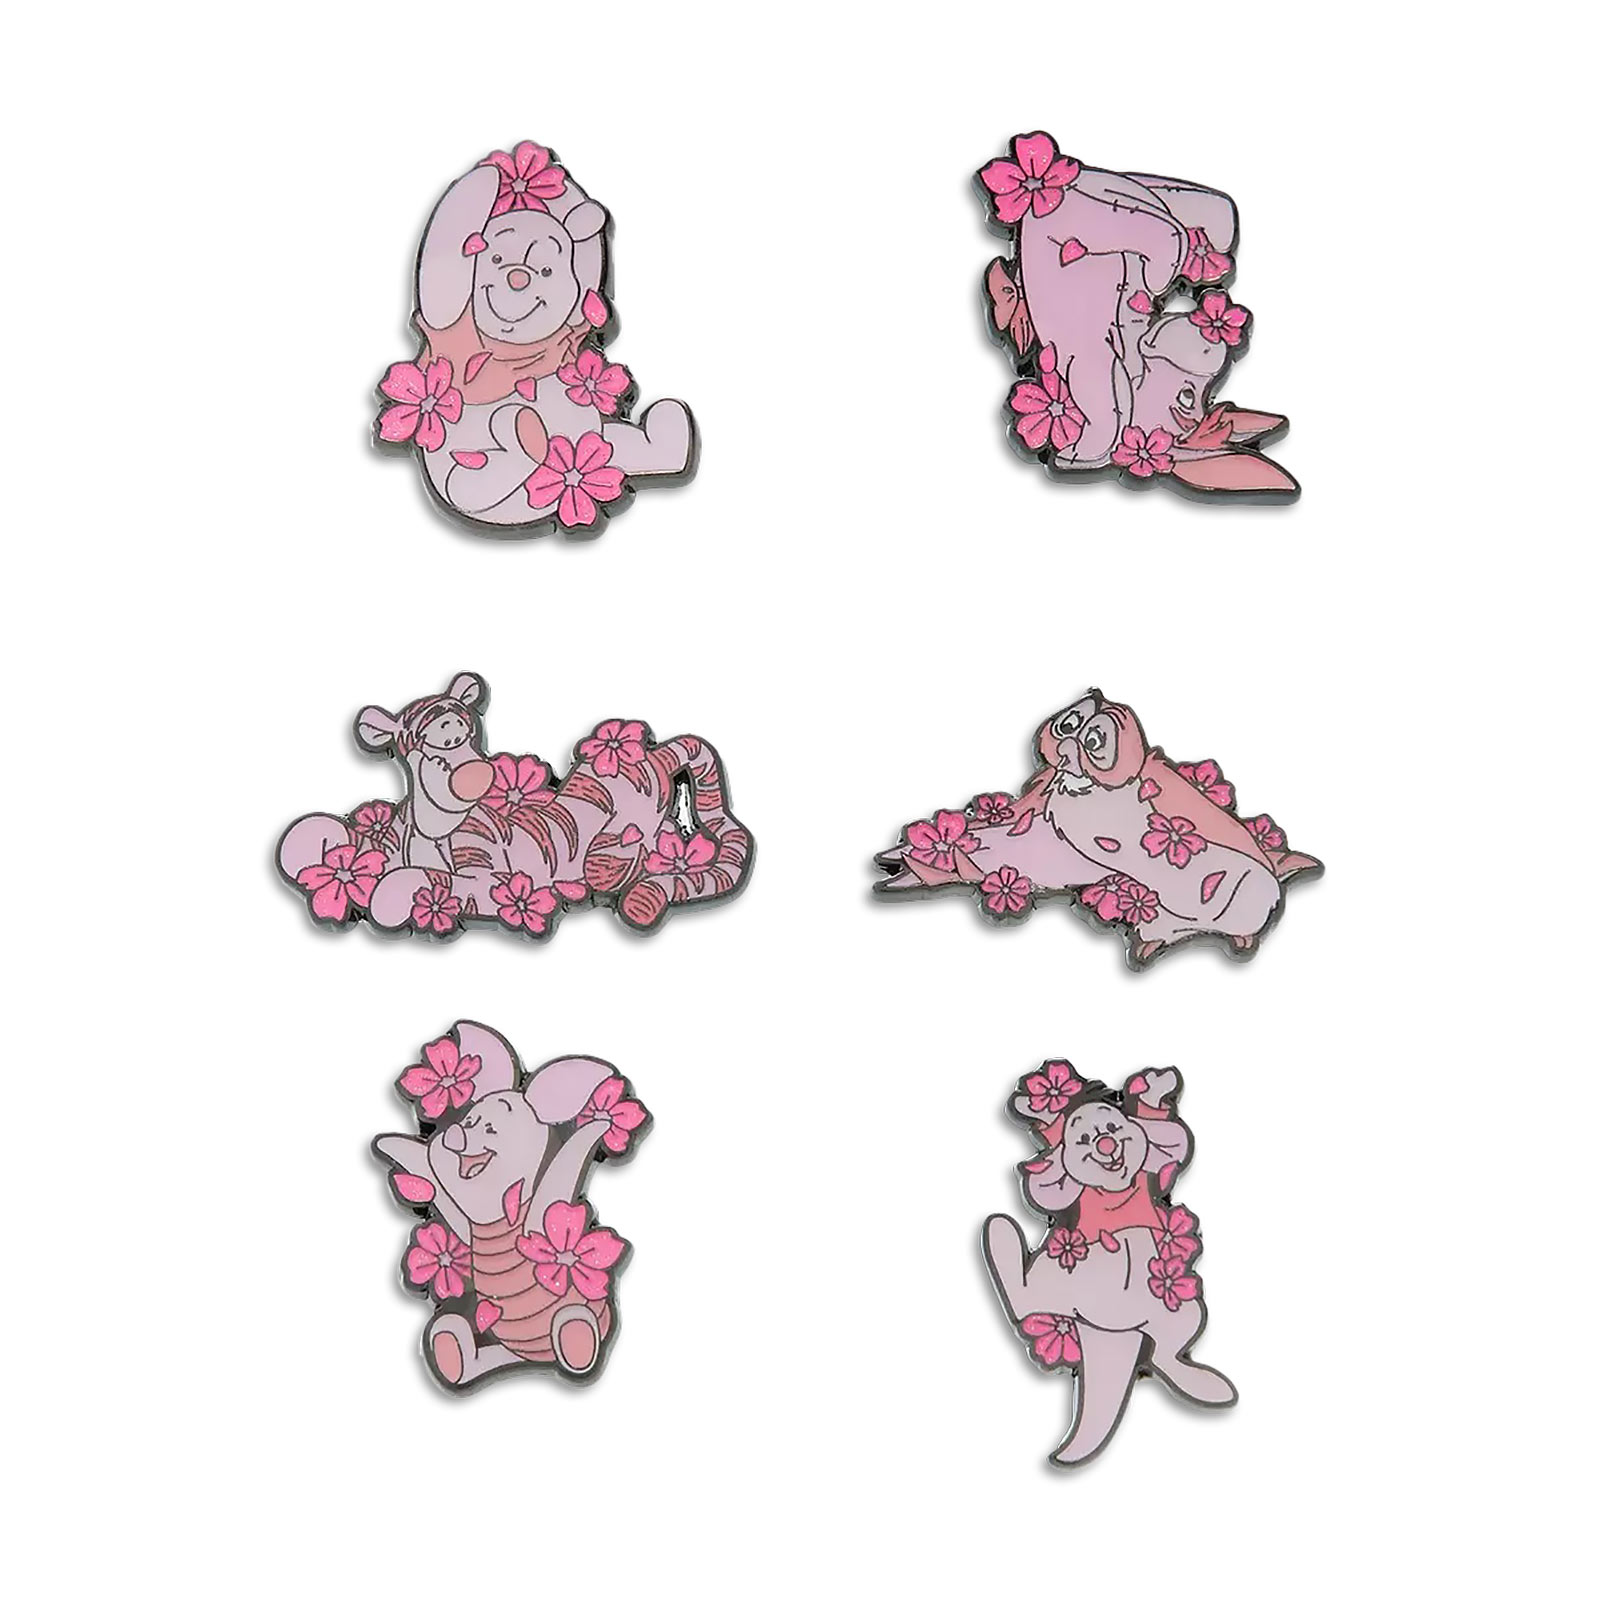 Winnie the Pooh - Cherry Blossom Mystery Funko Pop Pin